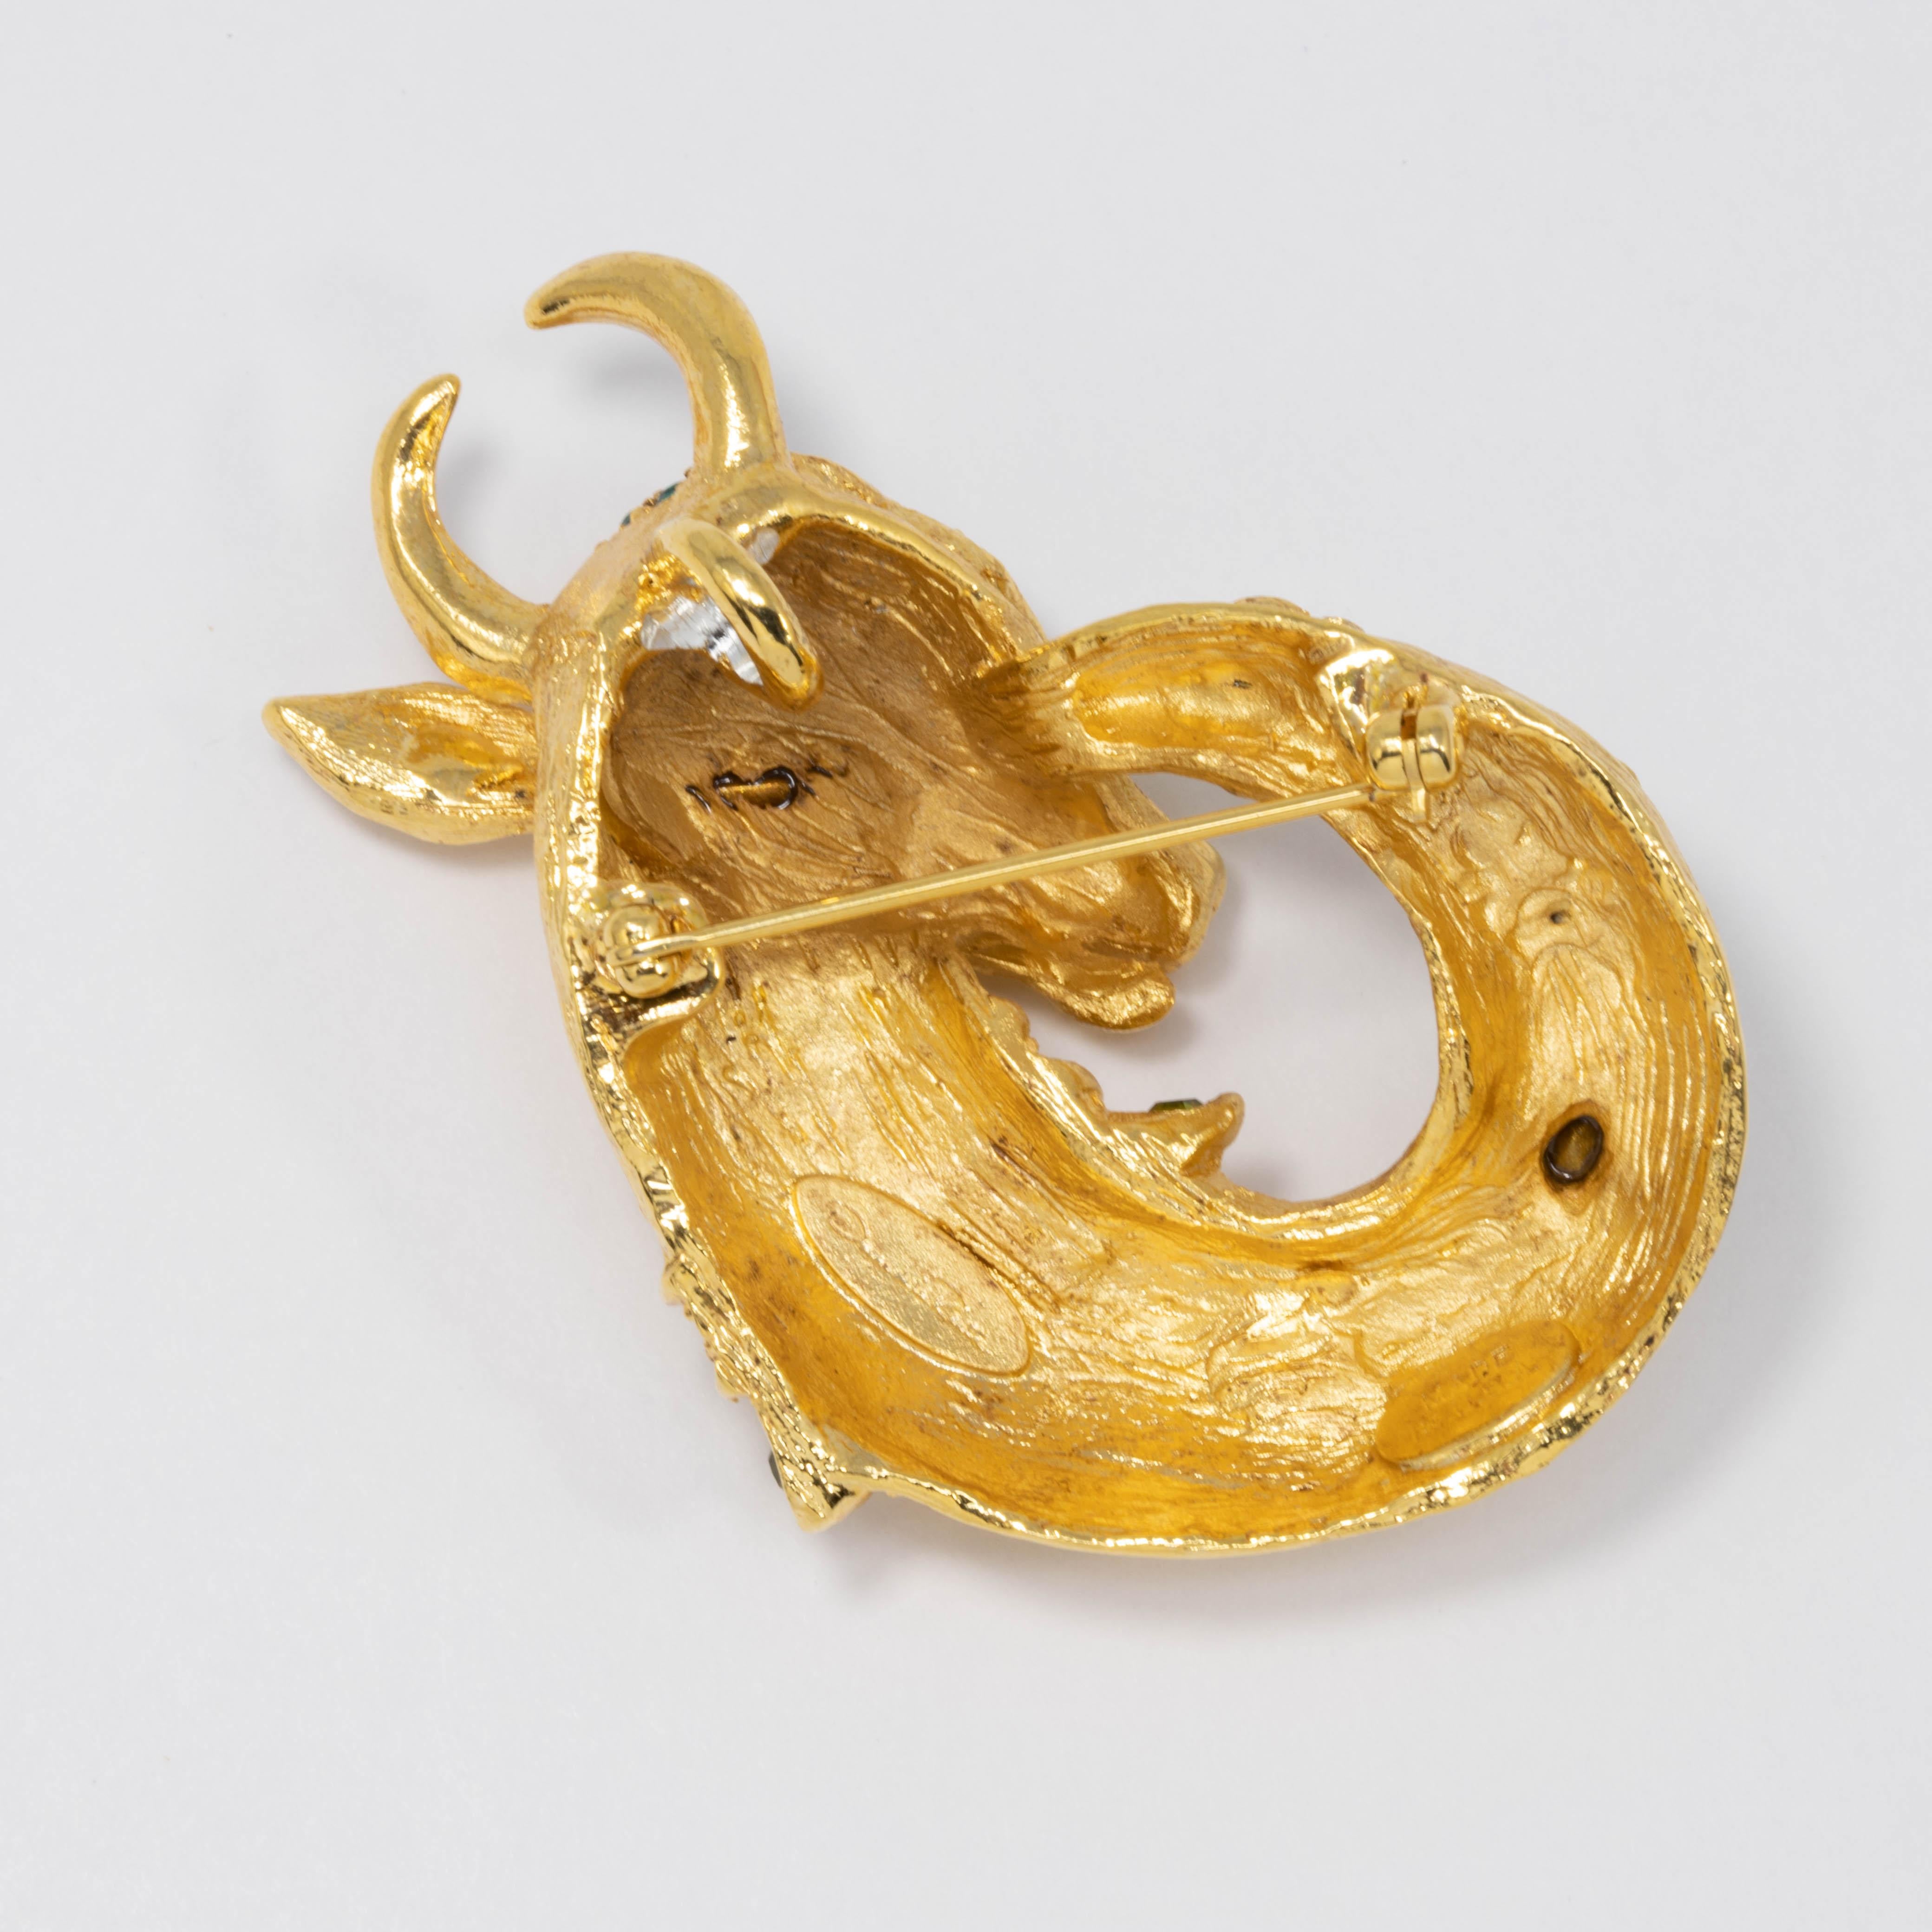 Women's Oscar de la Renta Lane Mythological Fantasy Goat Pin, Brooch, Pendant in Gold